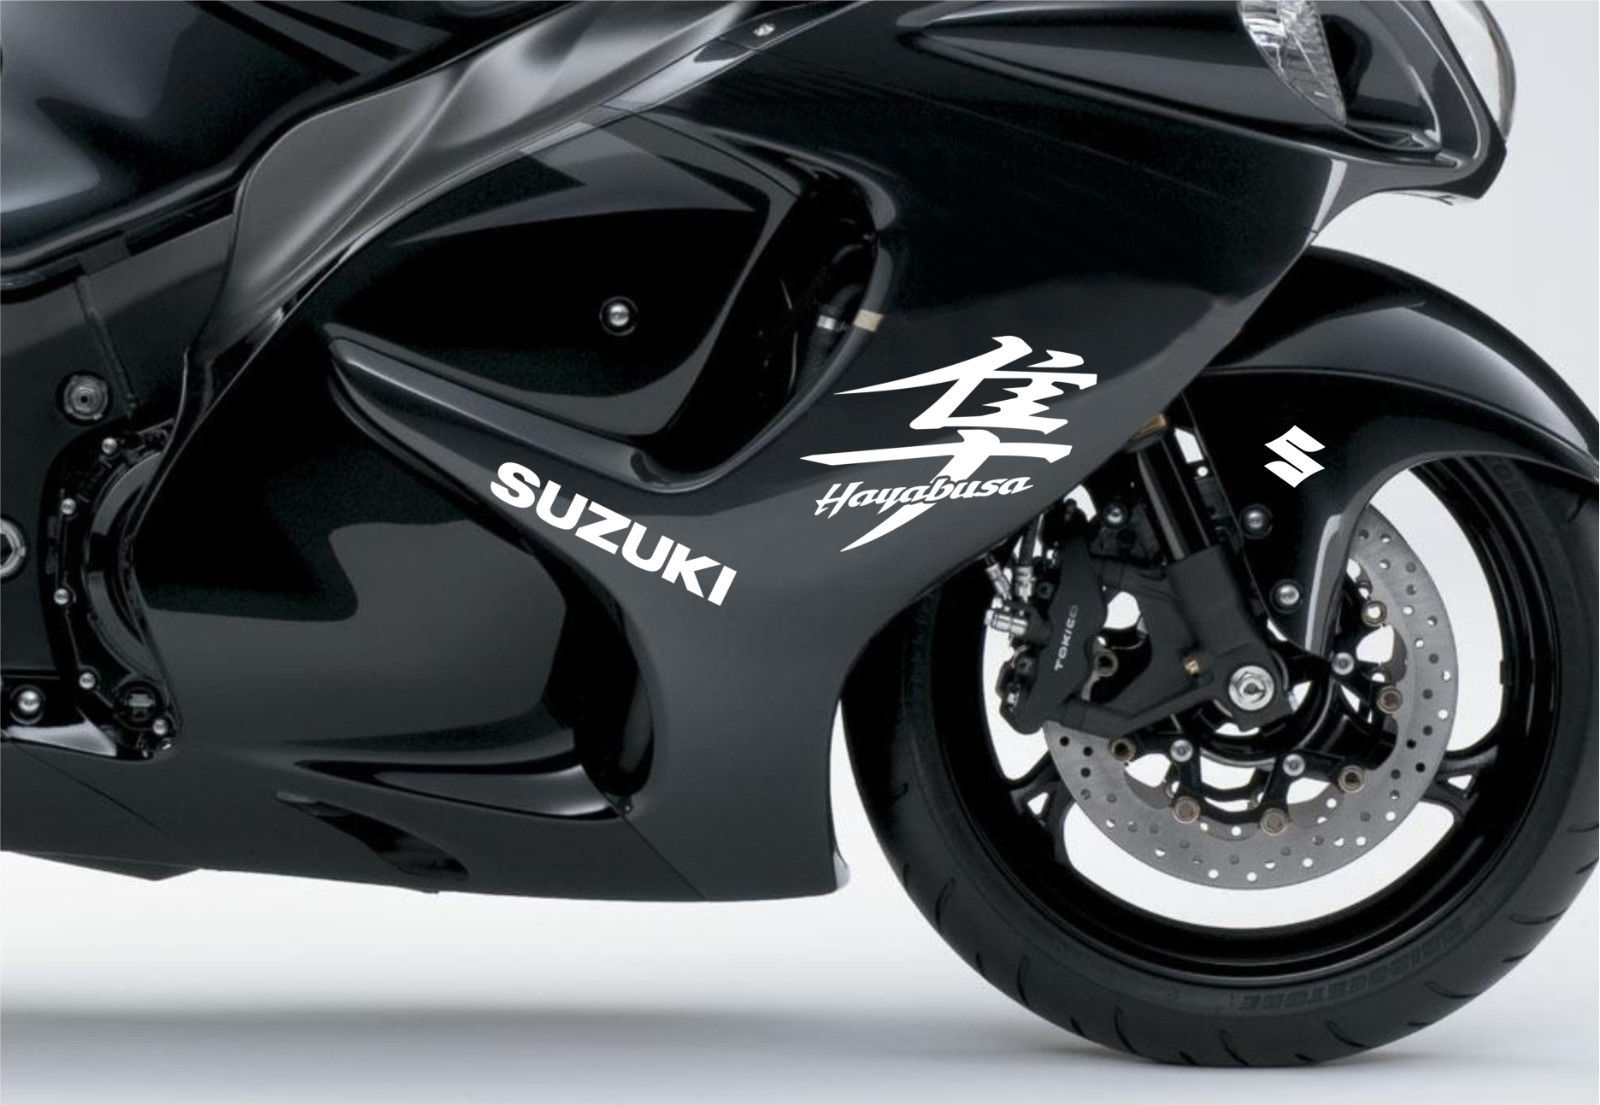 White Suzuki hayabusa moto sticker for fairing decal motorcycle